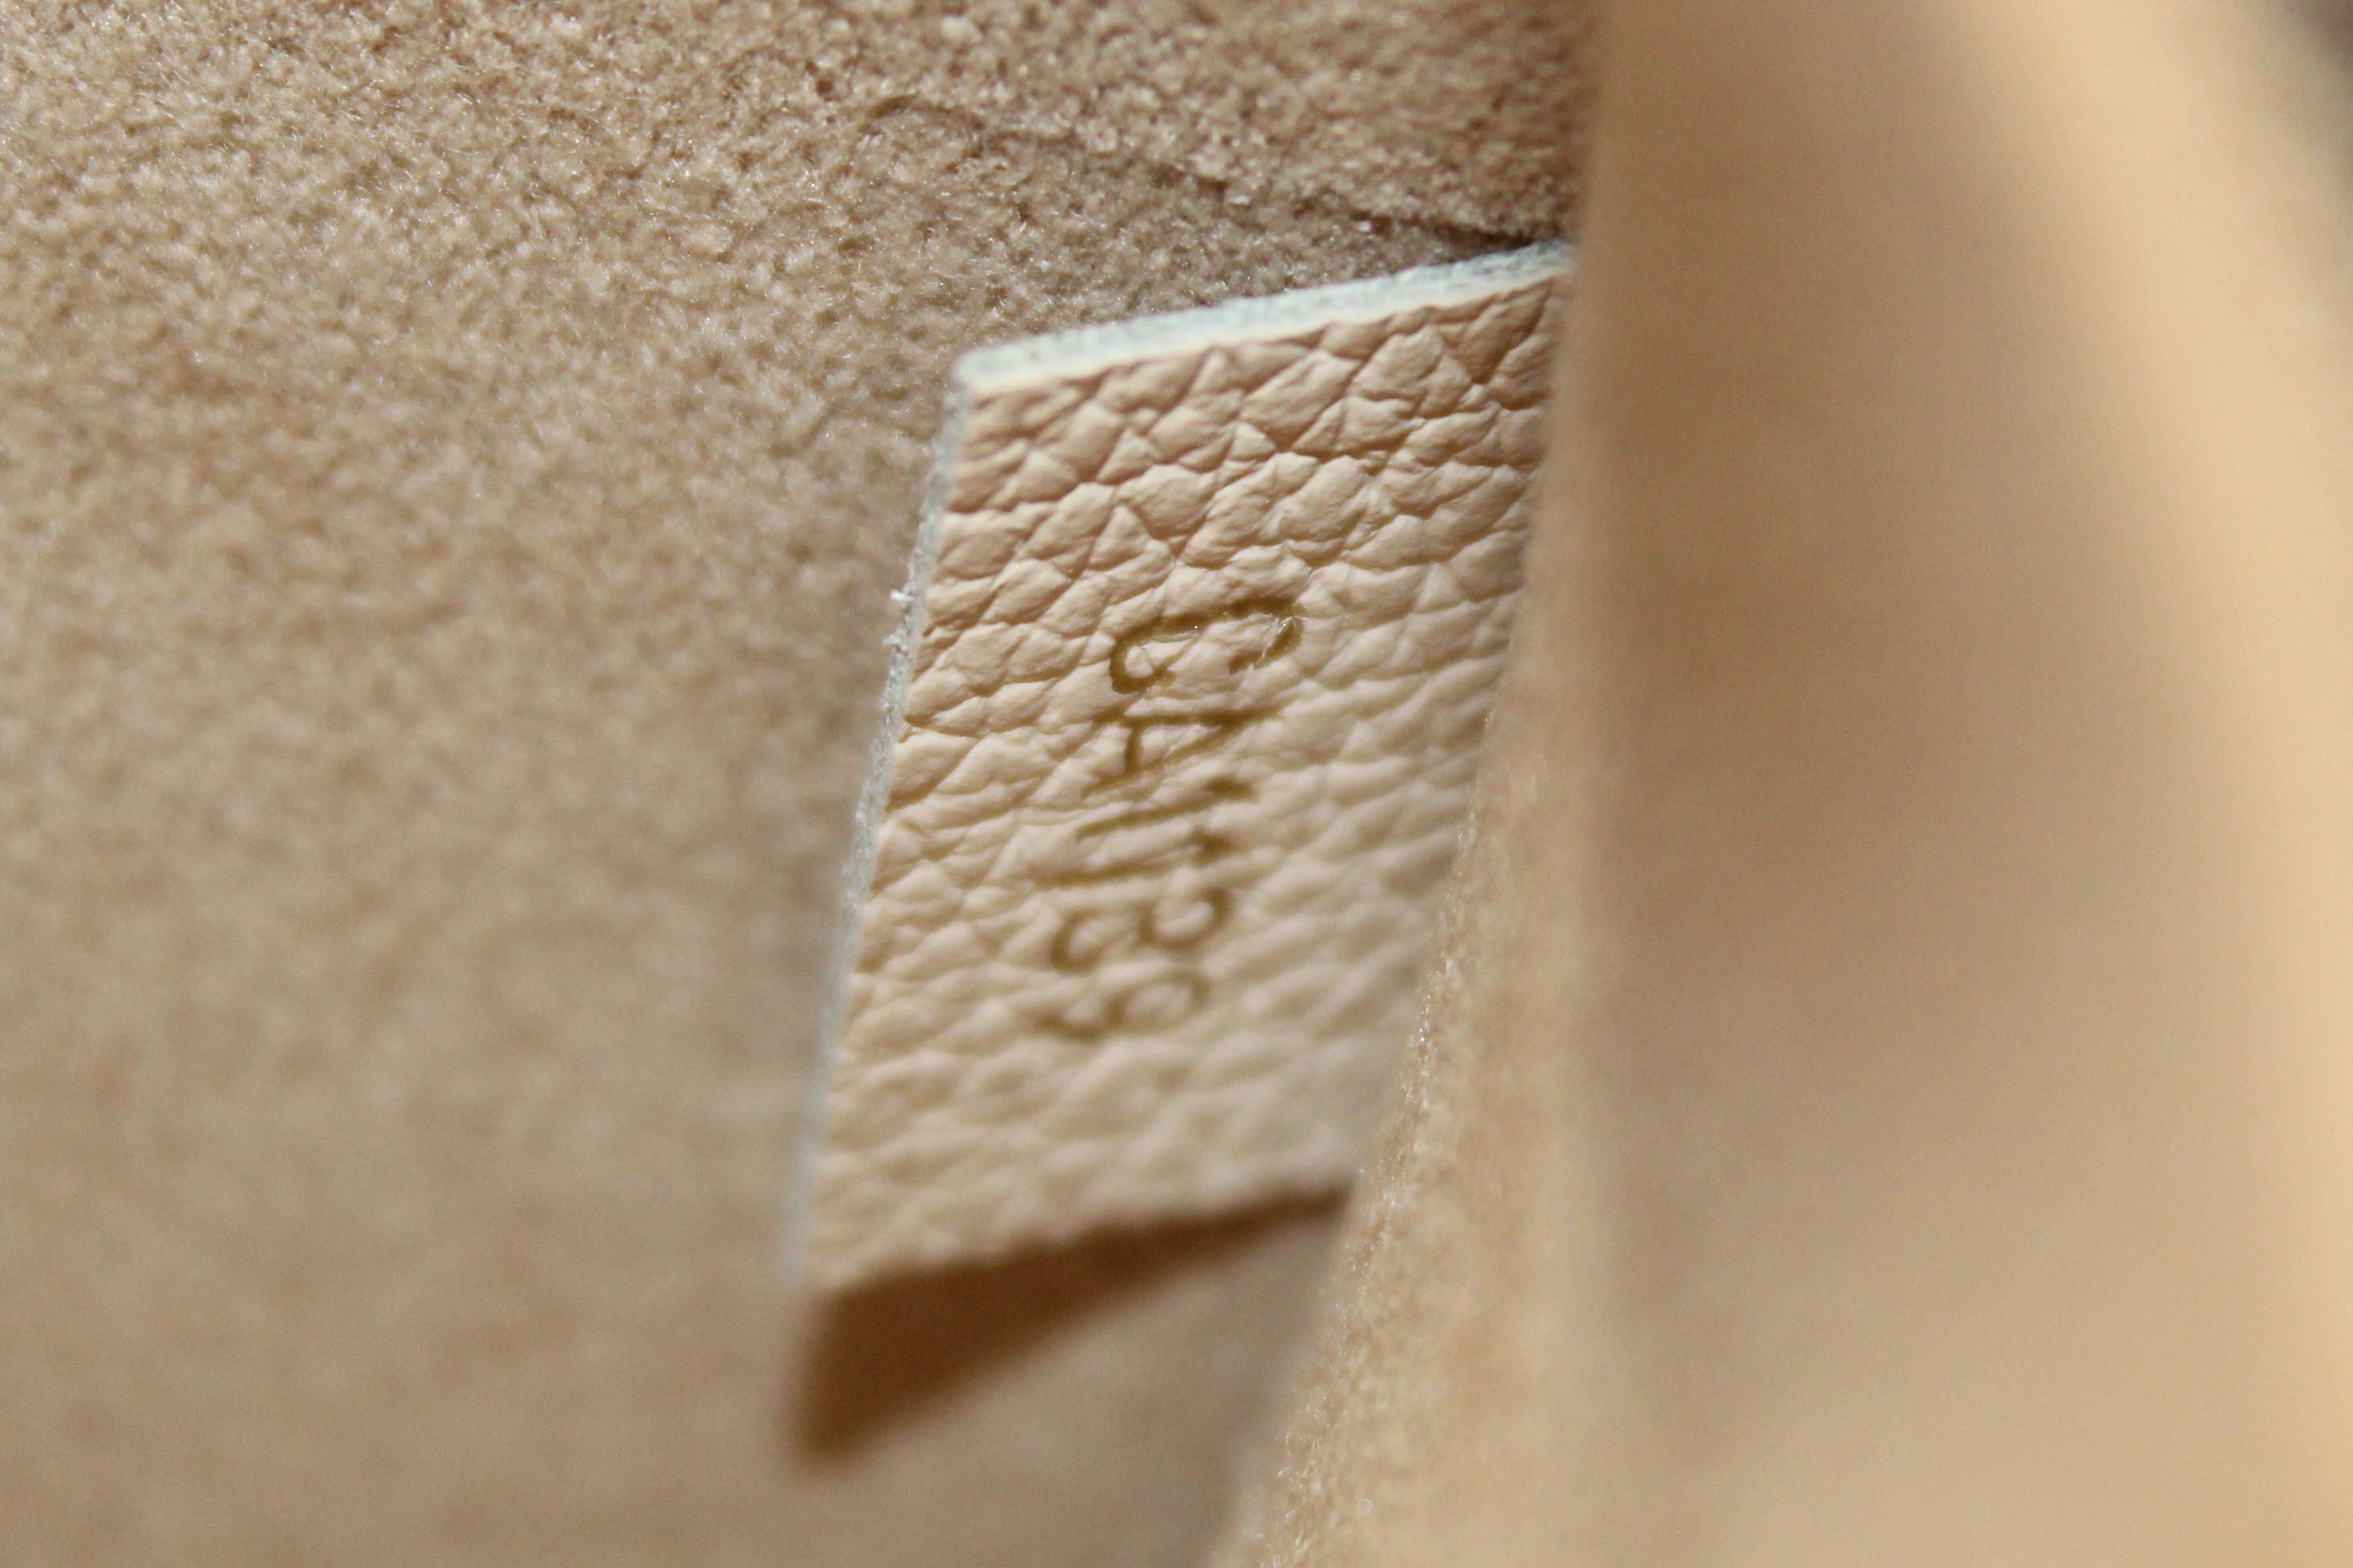 Louis Vuitton Vaugirard, Monogram and Creme, Preowned No Dustbag